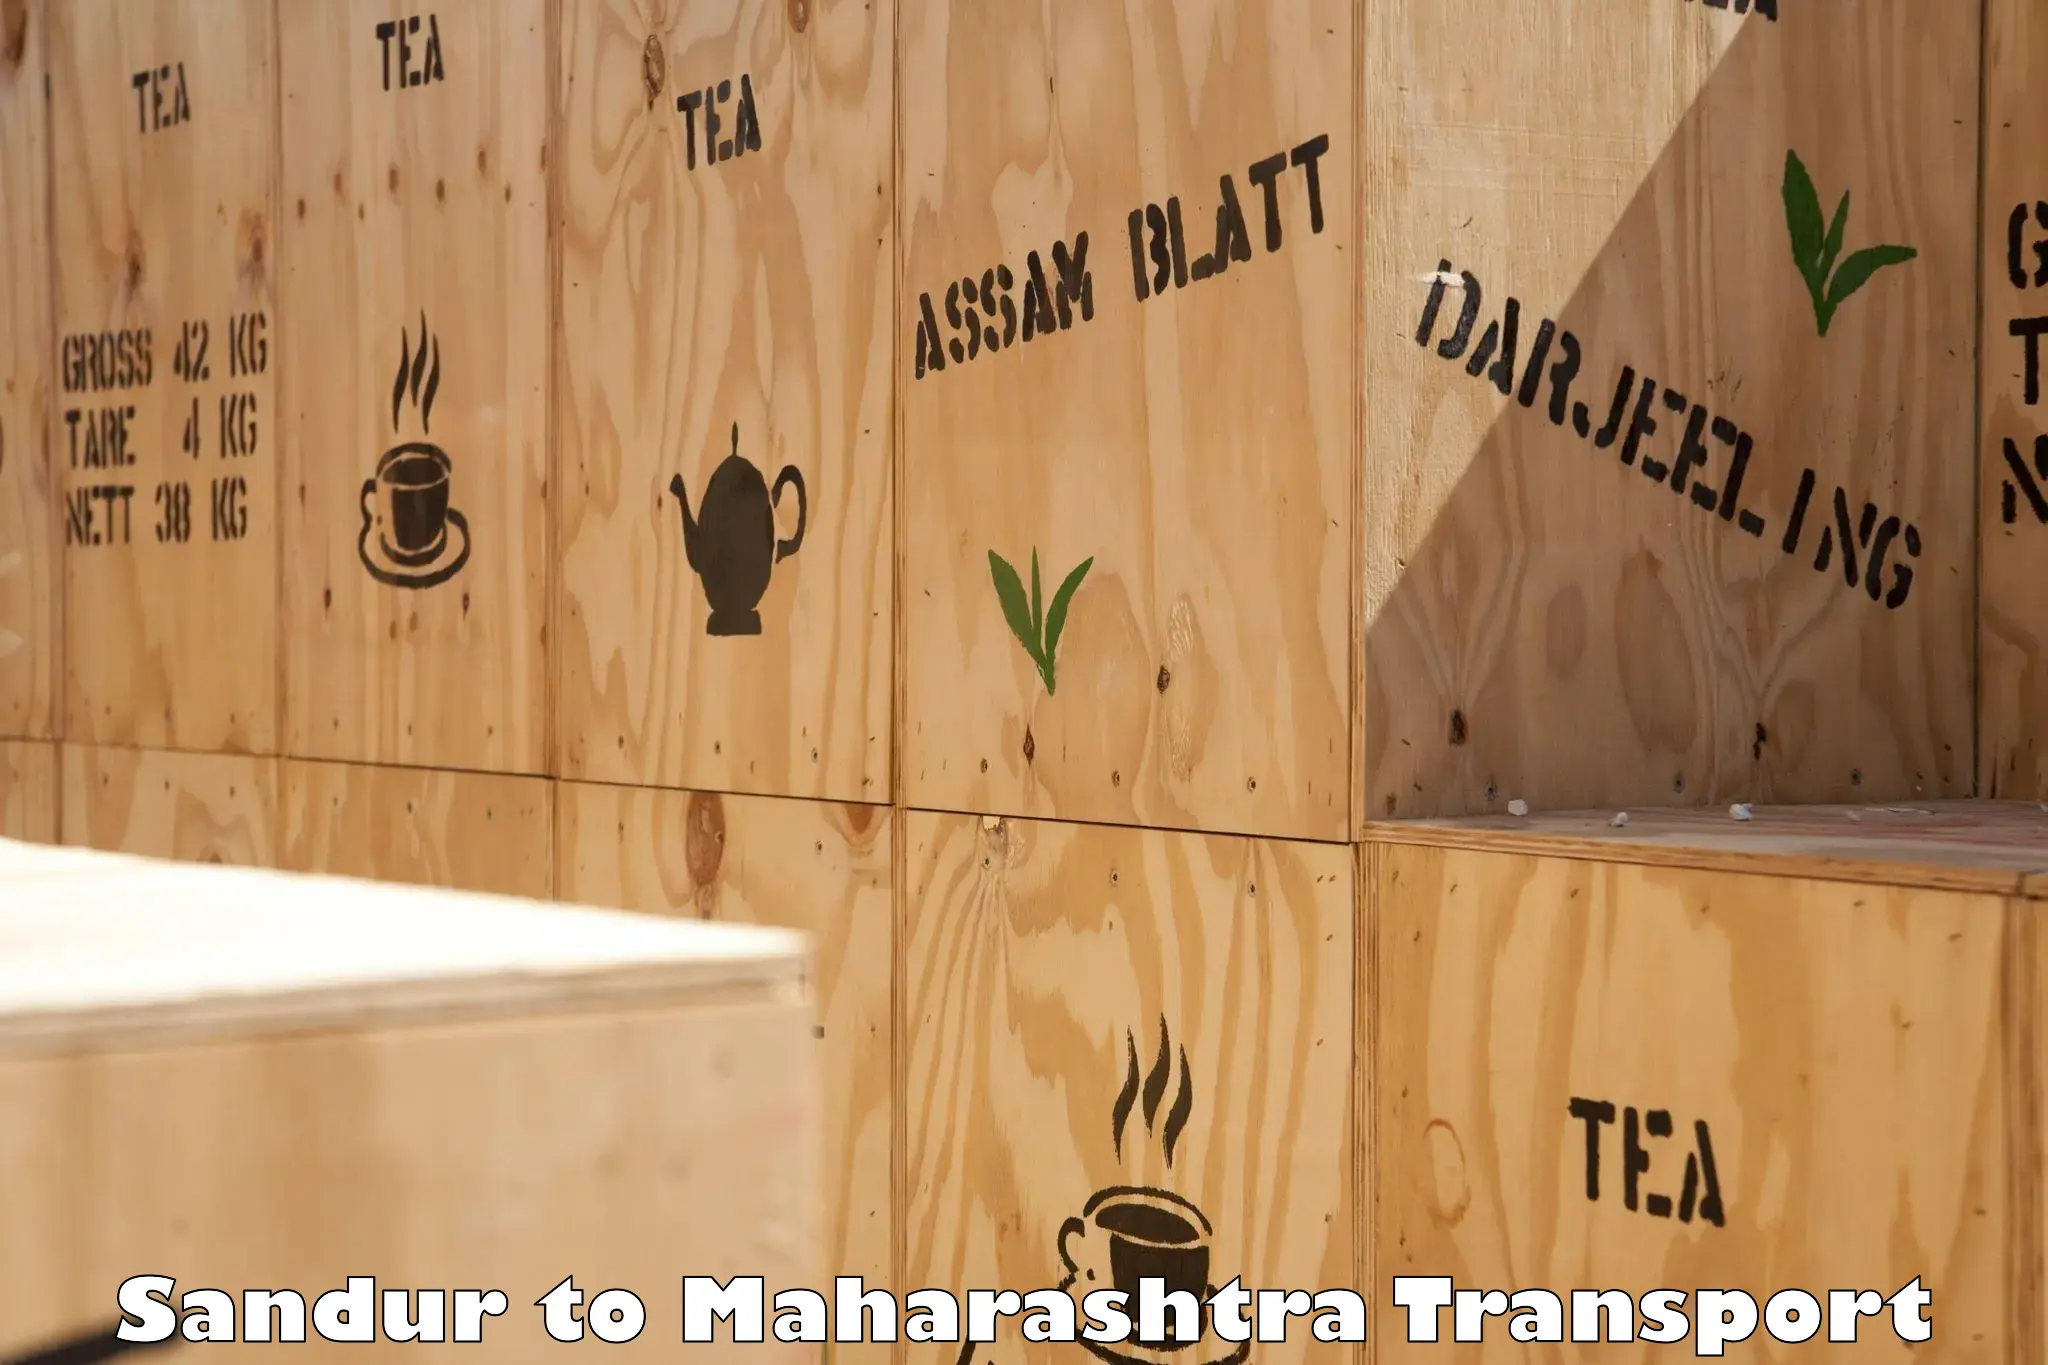 Online transport service Sandur to Bhandara